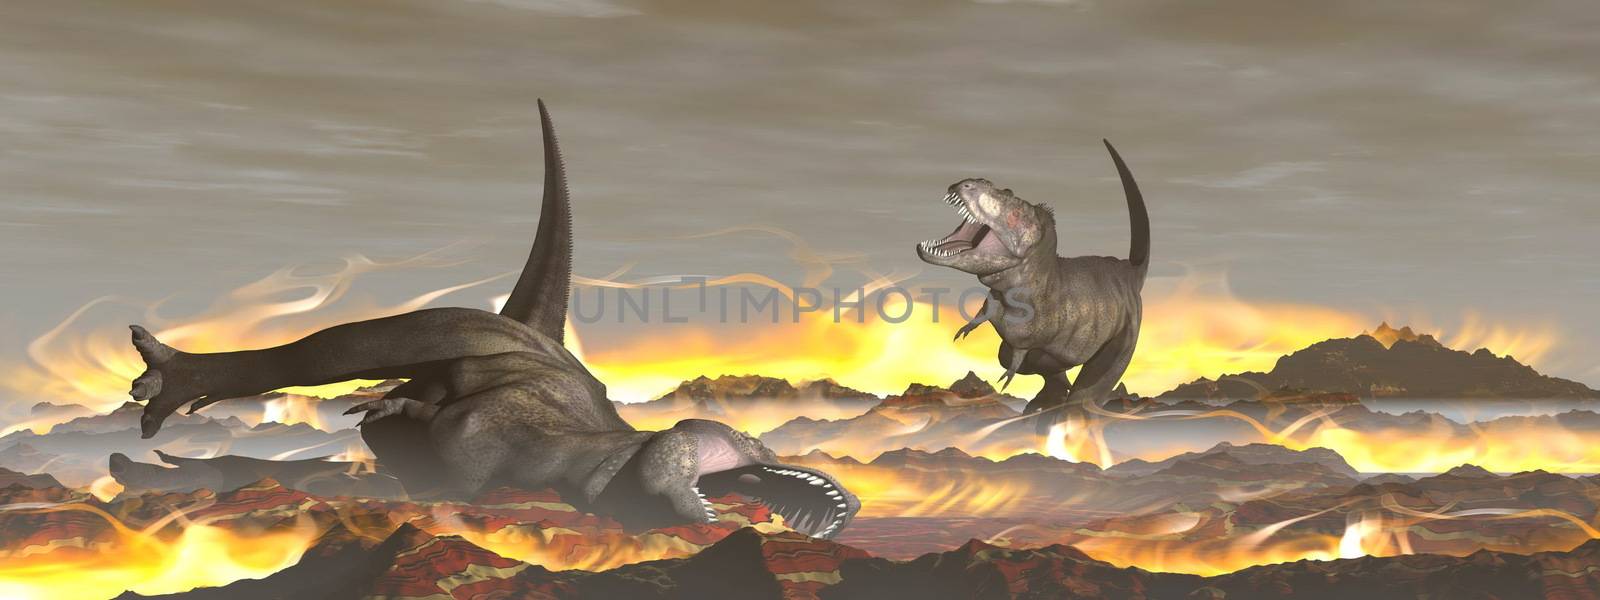 Tyrannosaurus dinosaur exctinction - 3D render by Elenaphotos21